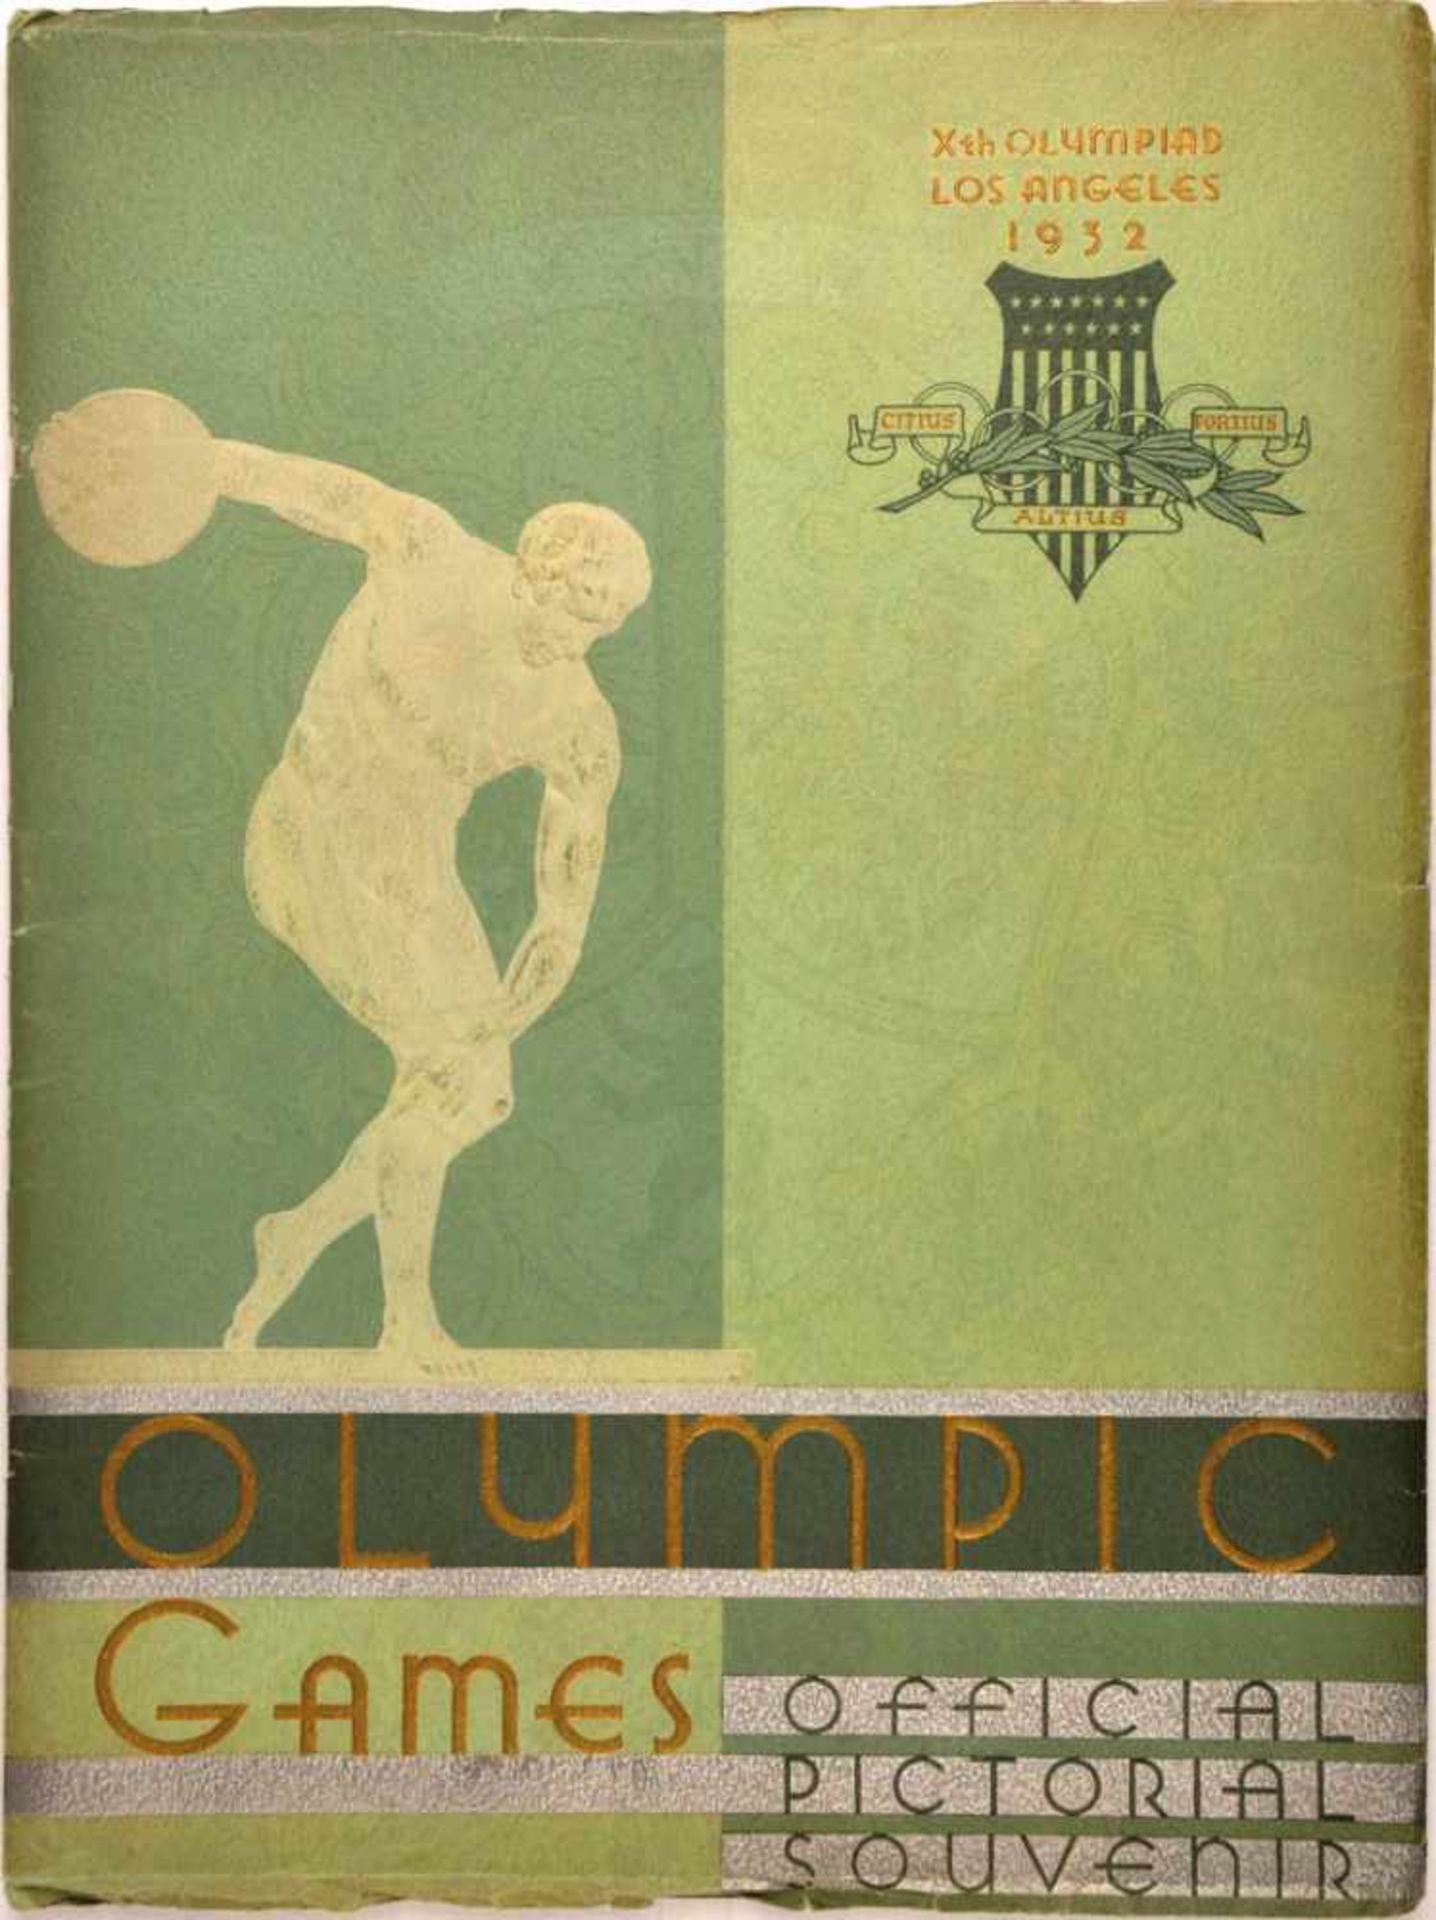 10. OLYMPIADE LOS ANGELES 1932, offz. Bildband, 64 S., engl. Text, zahlr. Fotos, Medaillenspiegel